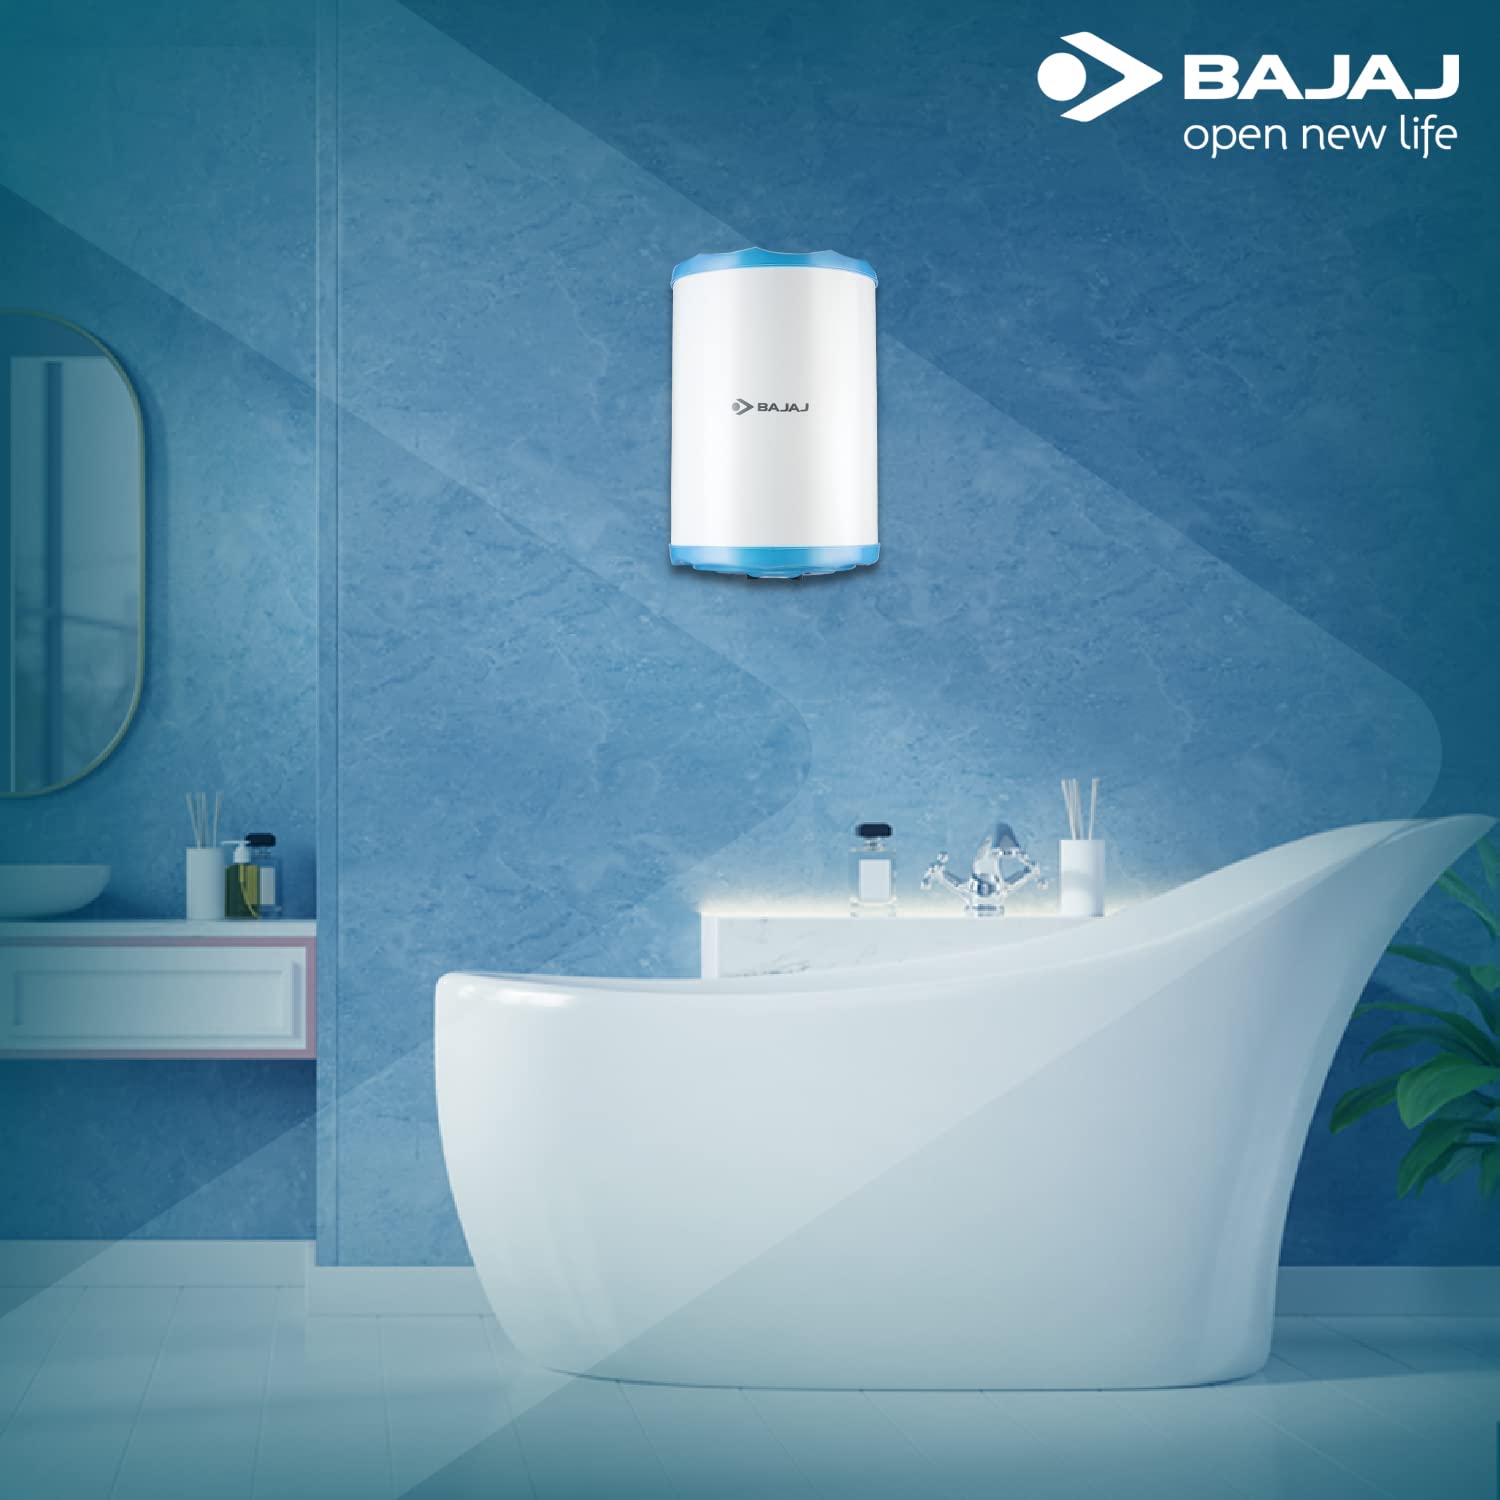 Bajaj Montage 15 litres Storage Vertical 5 Star Water Heater (White)